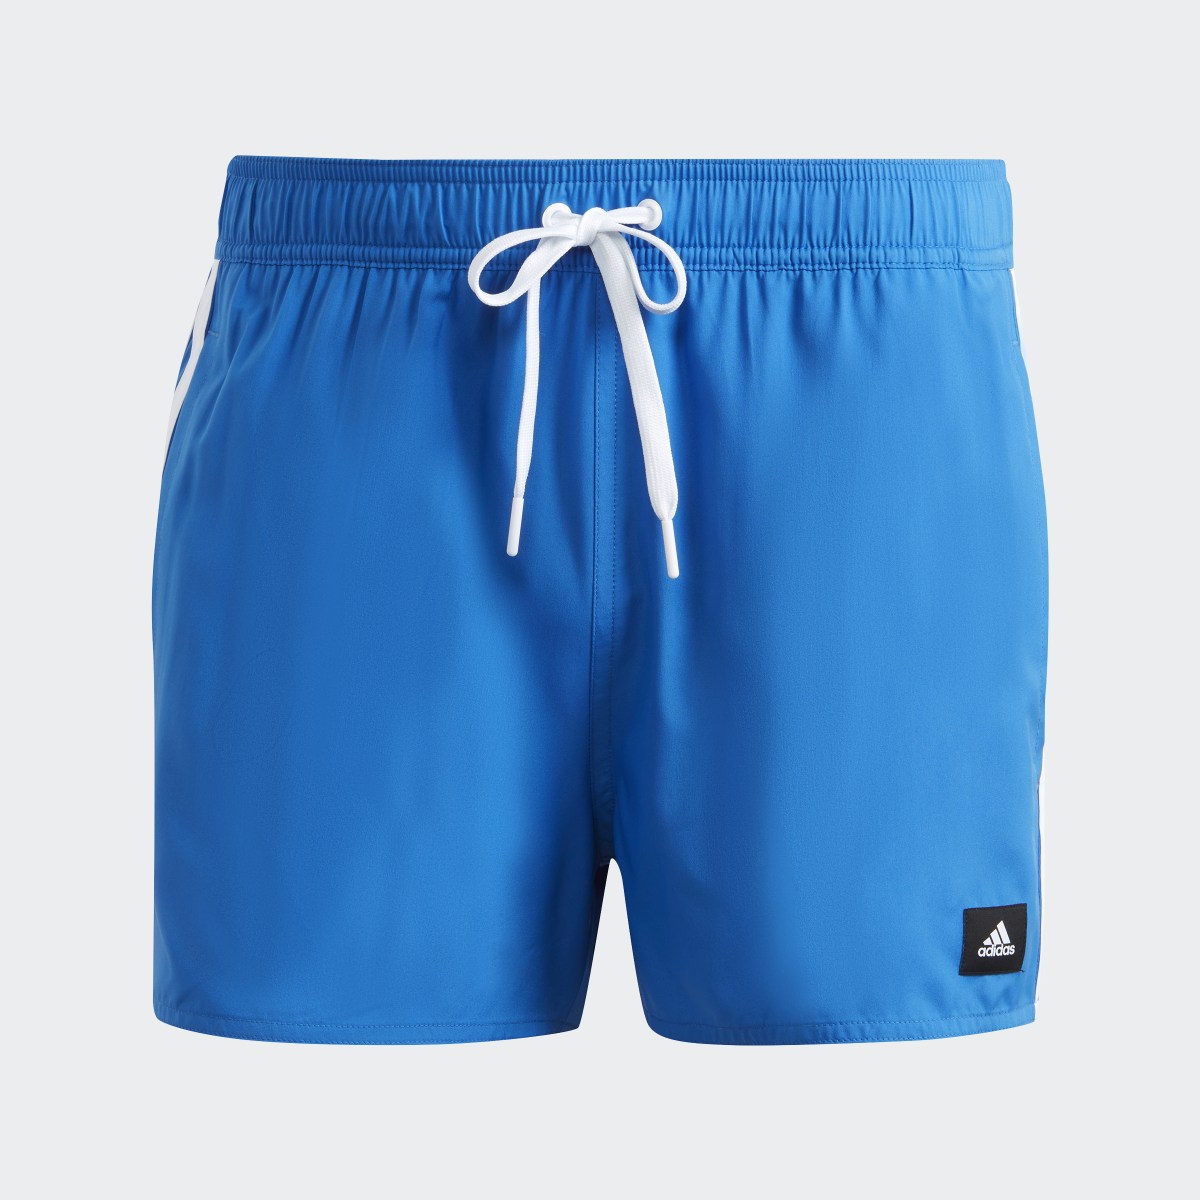 Adidas 3-Stripes CLX Very-Short-Length Swim Shorts. 4